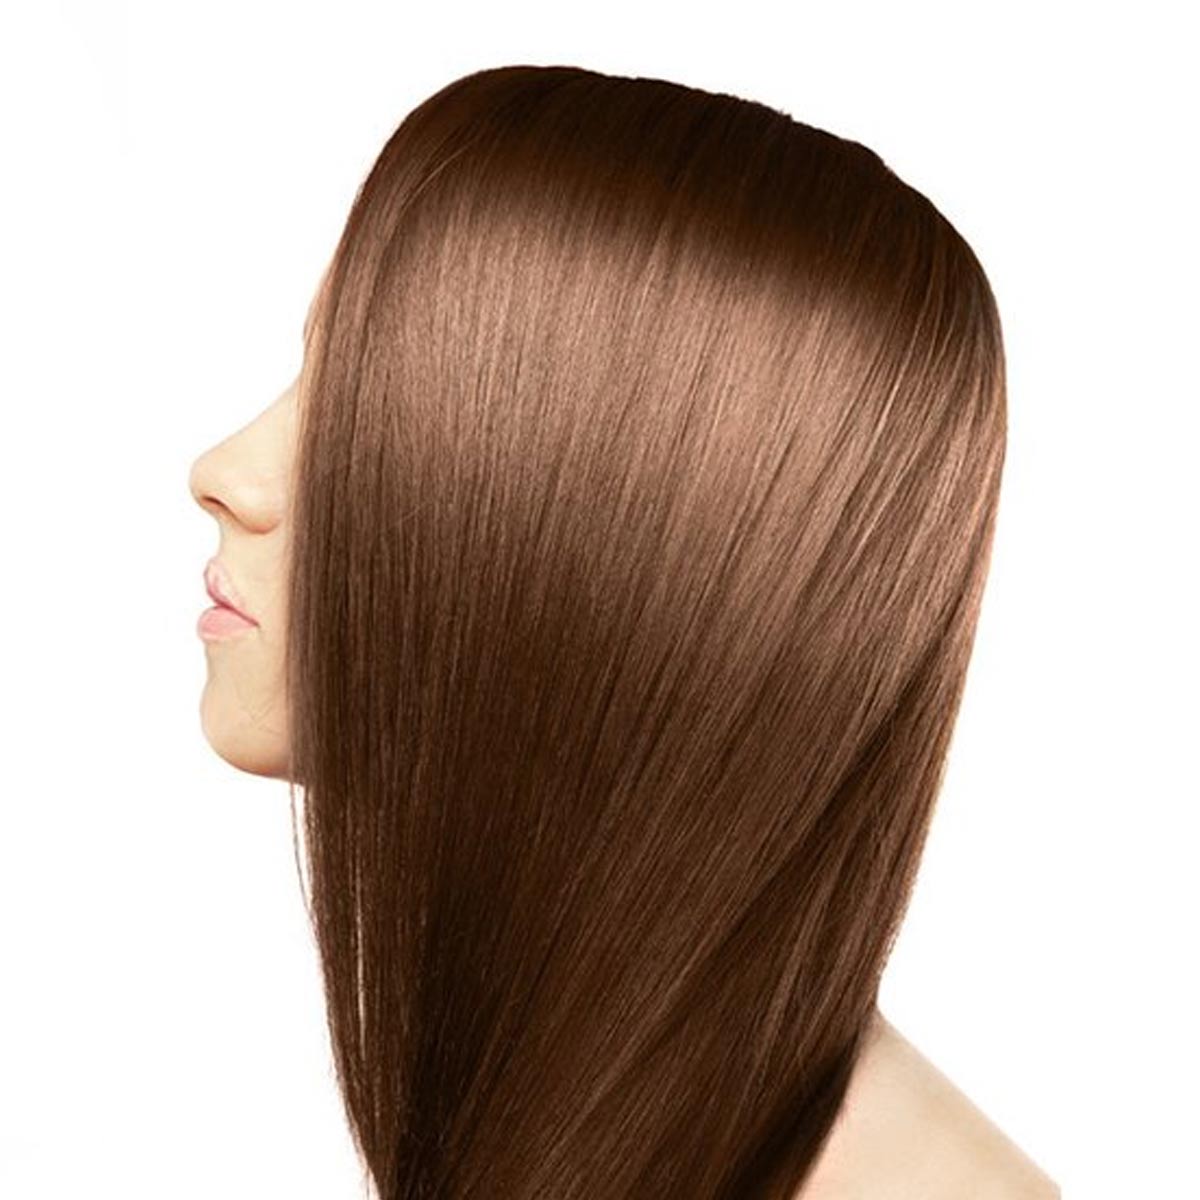 Alternate image of Light Brown Henna Hair Color